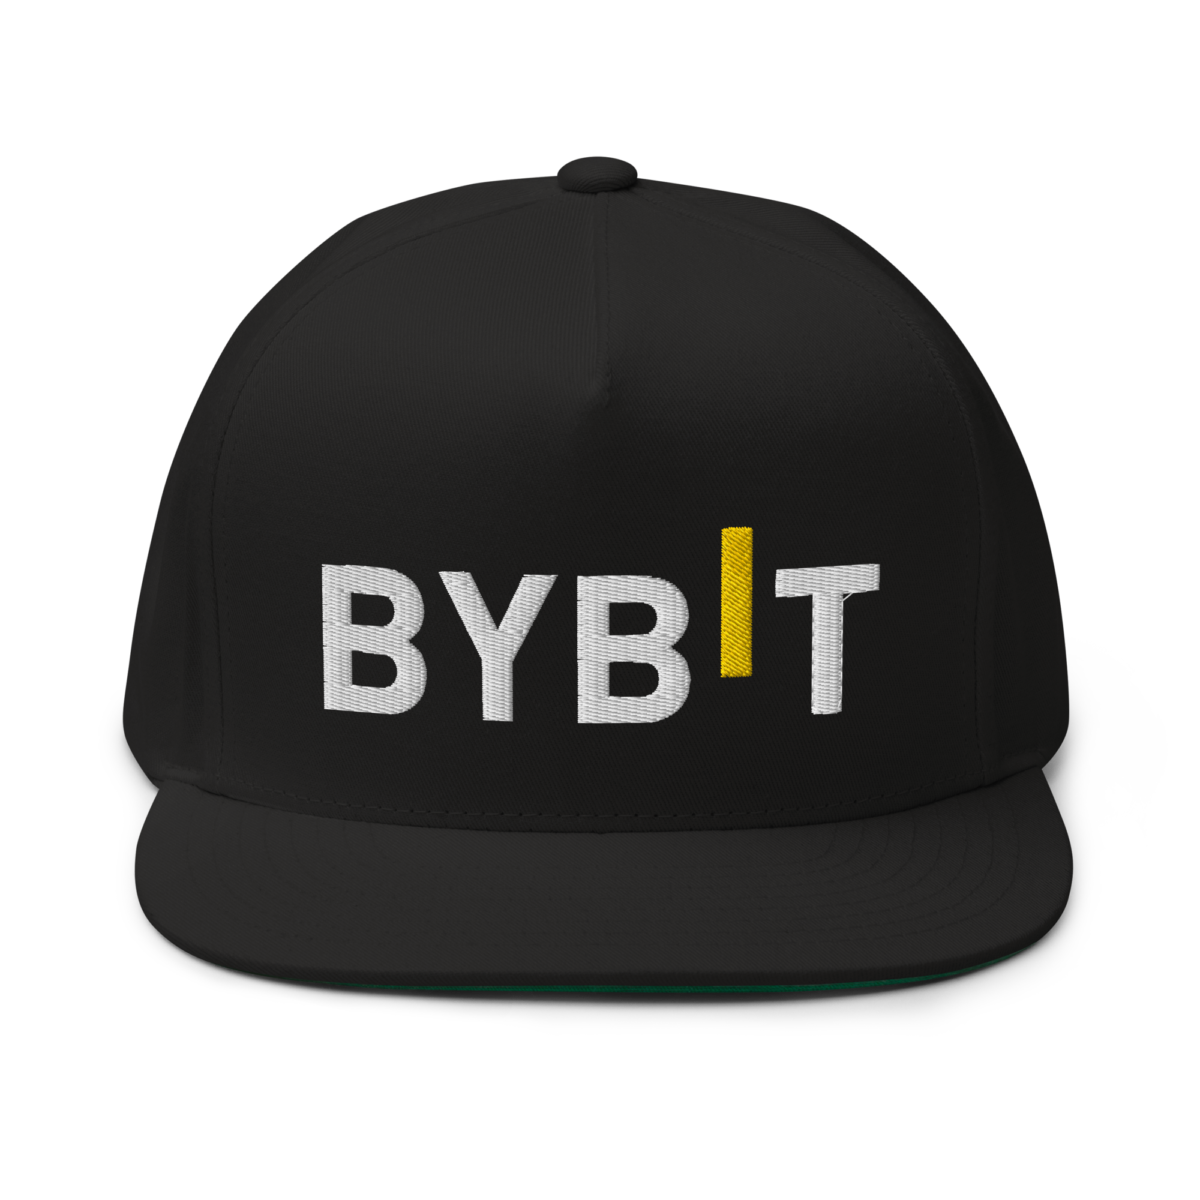 Bybit Snapback hat